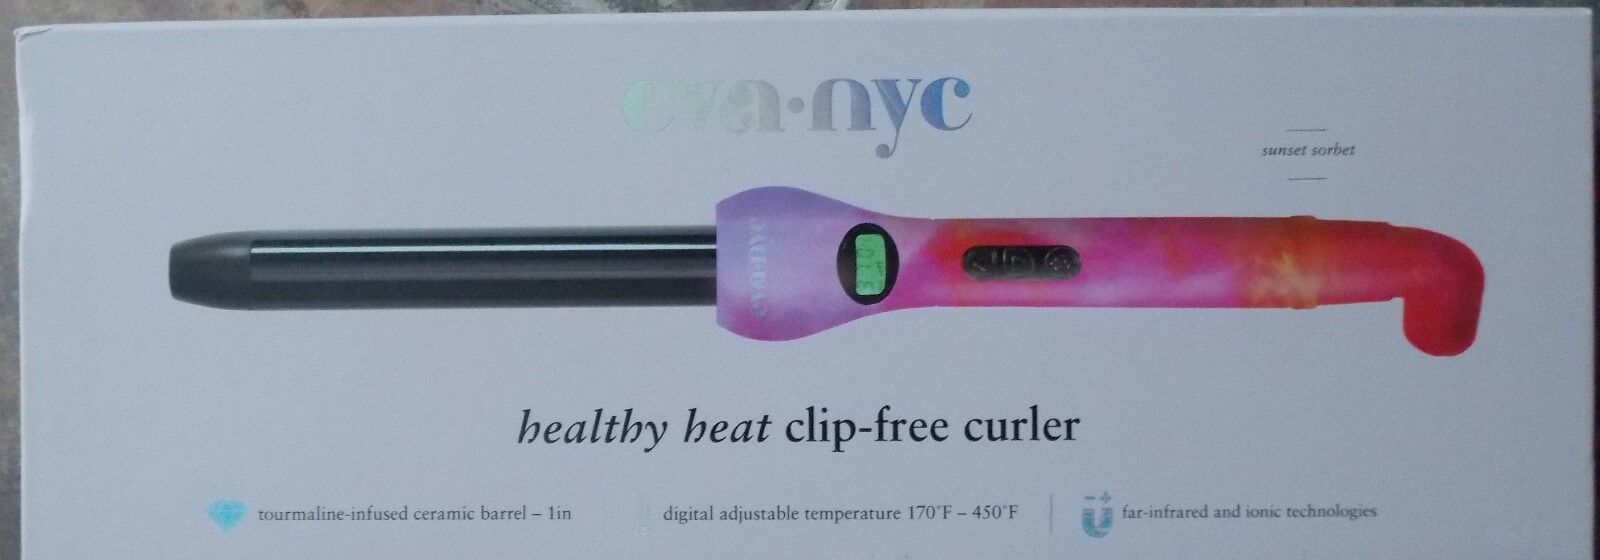 Eva-NYC Healthy Heat Clip Free Curler ~ NEW Sunset Sorbet Pink